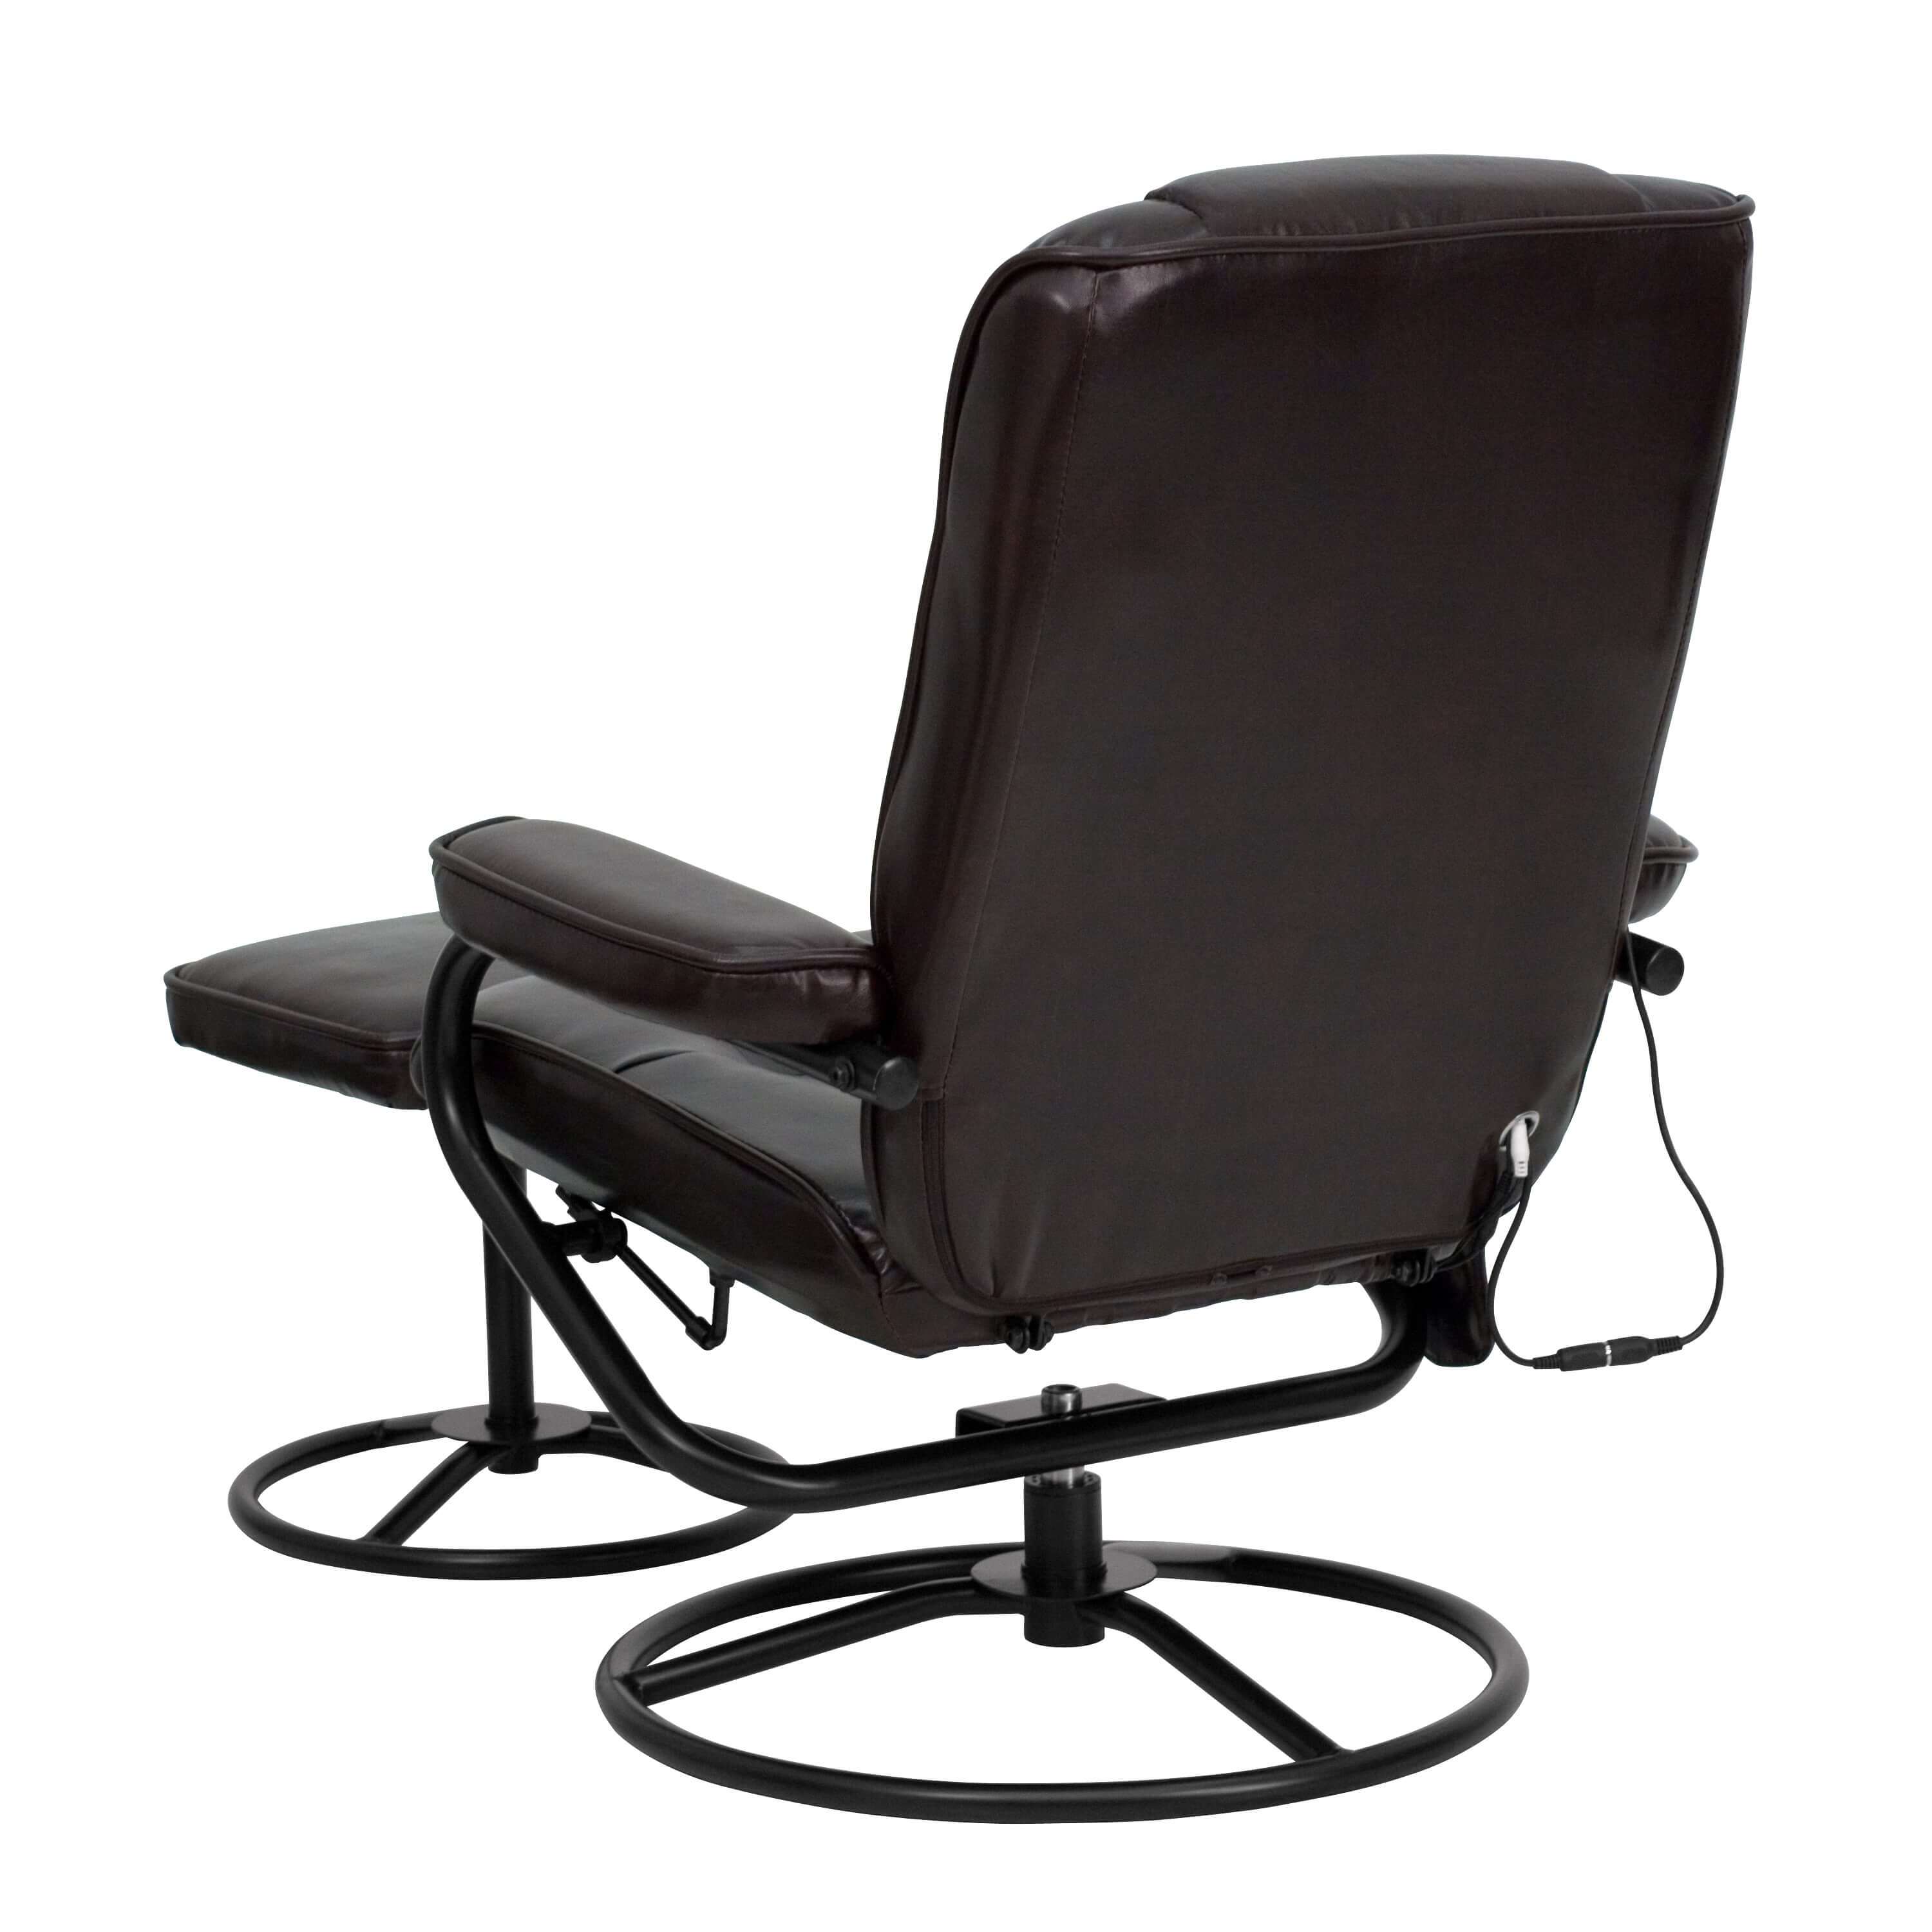 Massage chair recliner back view